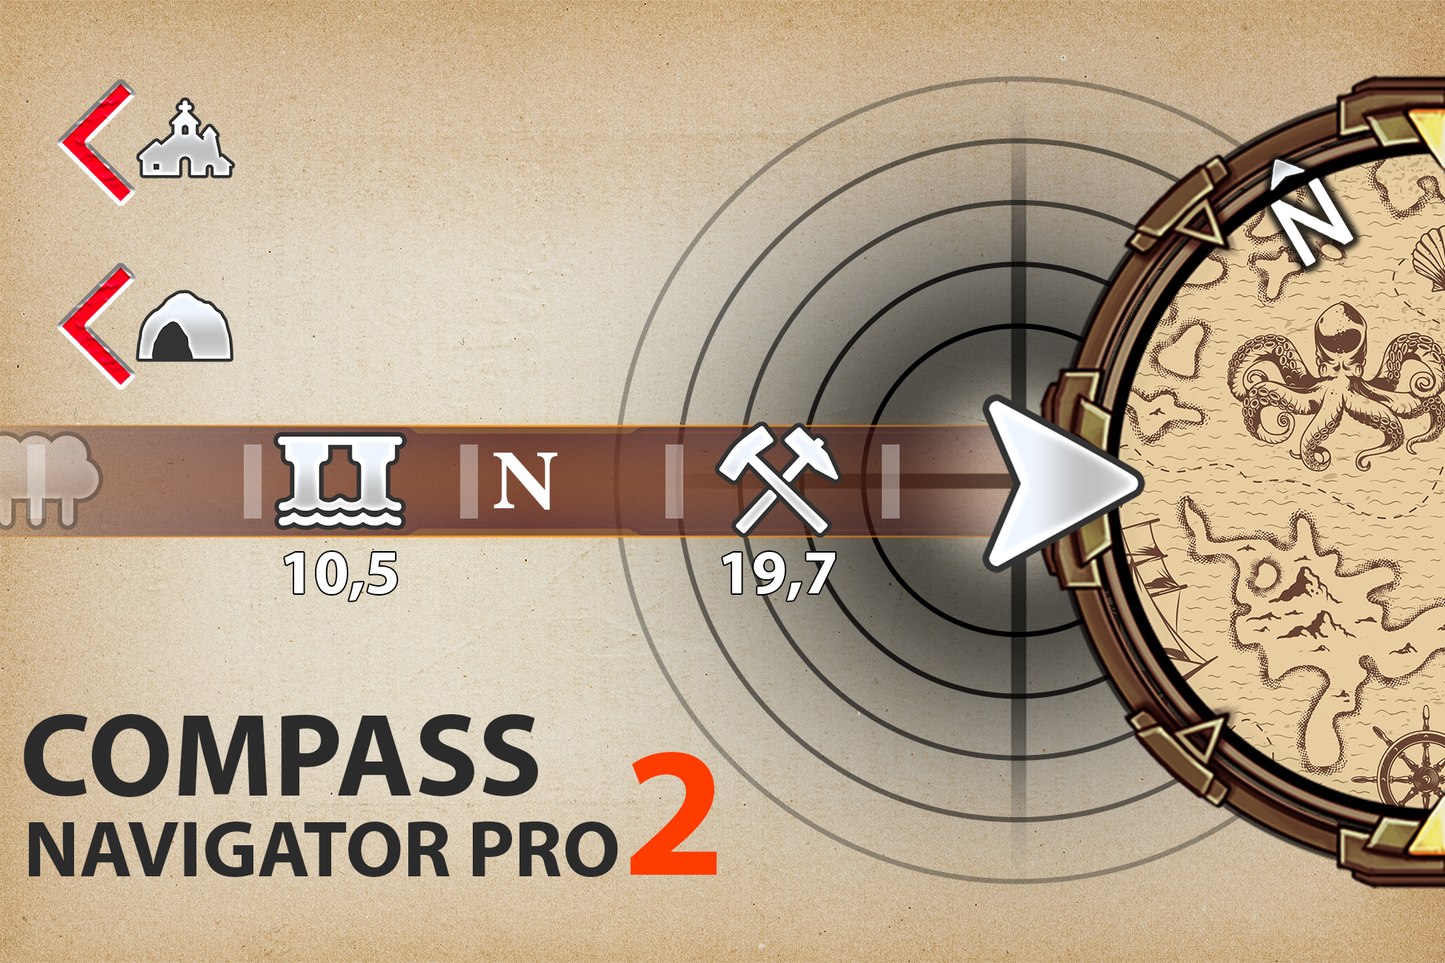 Compass Navigator Pro 2